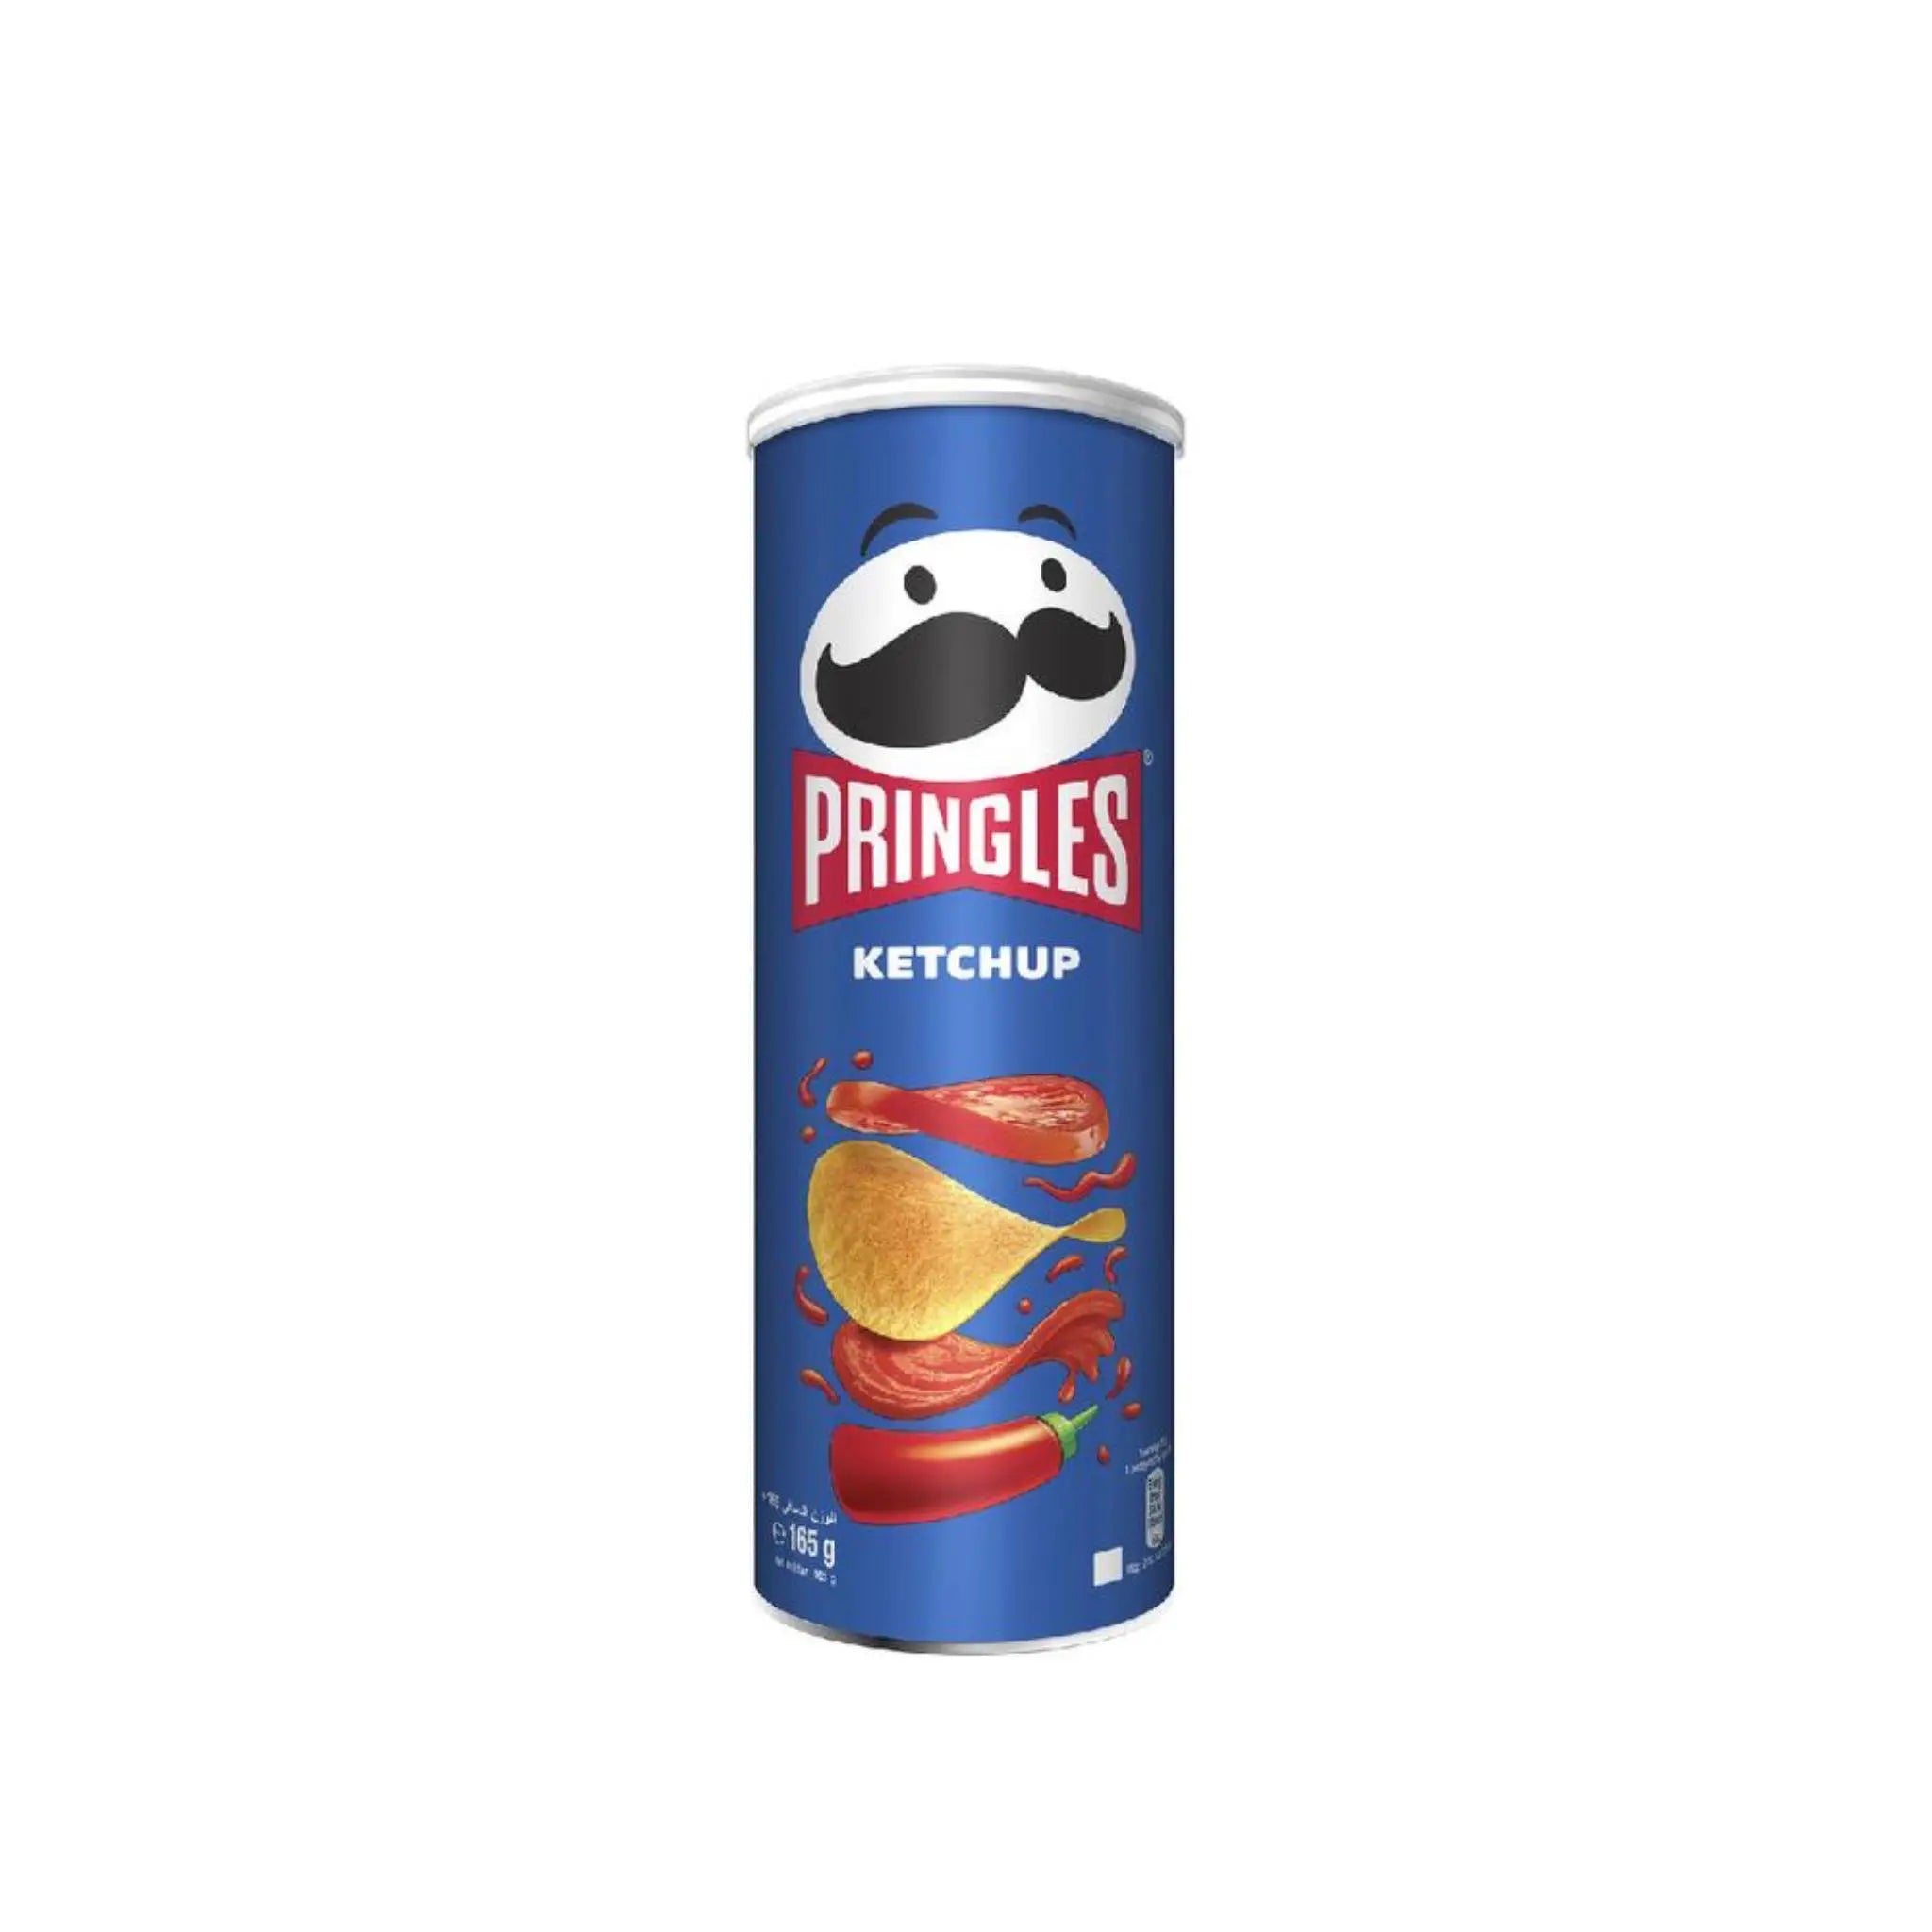 Pringles Ketchup Flavored Chips Can 19X165G Pringles